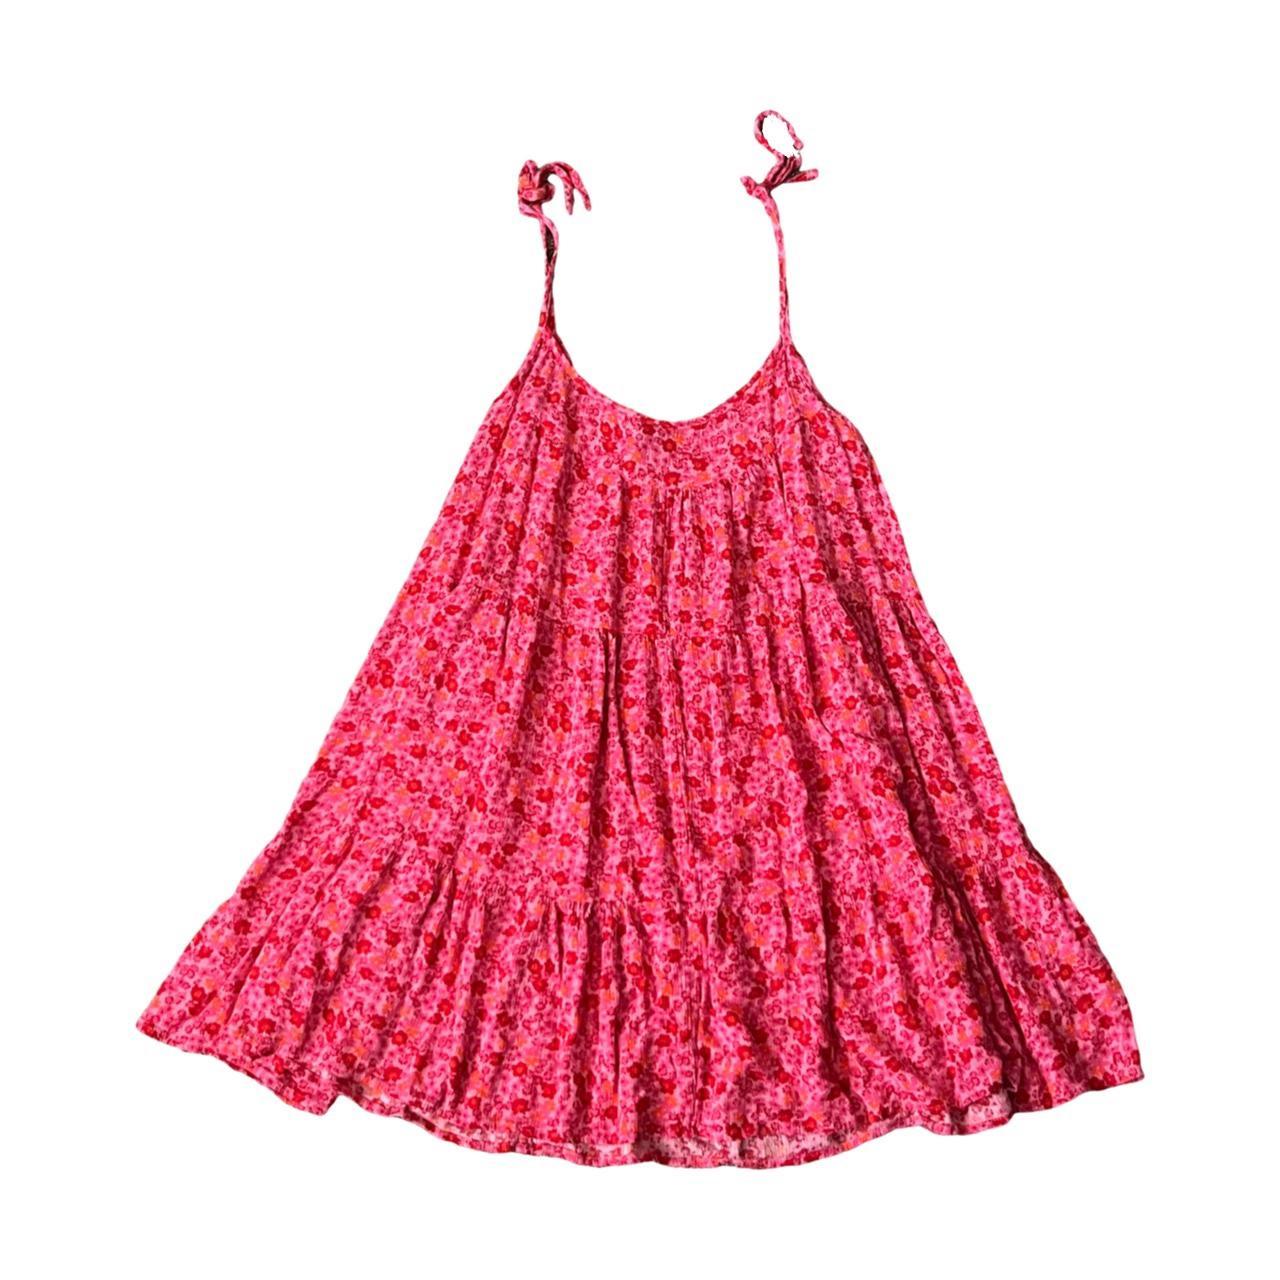 Pink Sun Dress - brand is wild fable - dress is a... - Depop